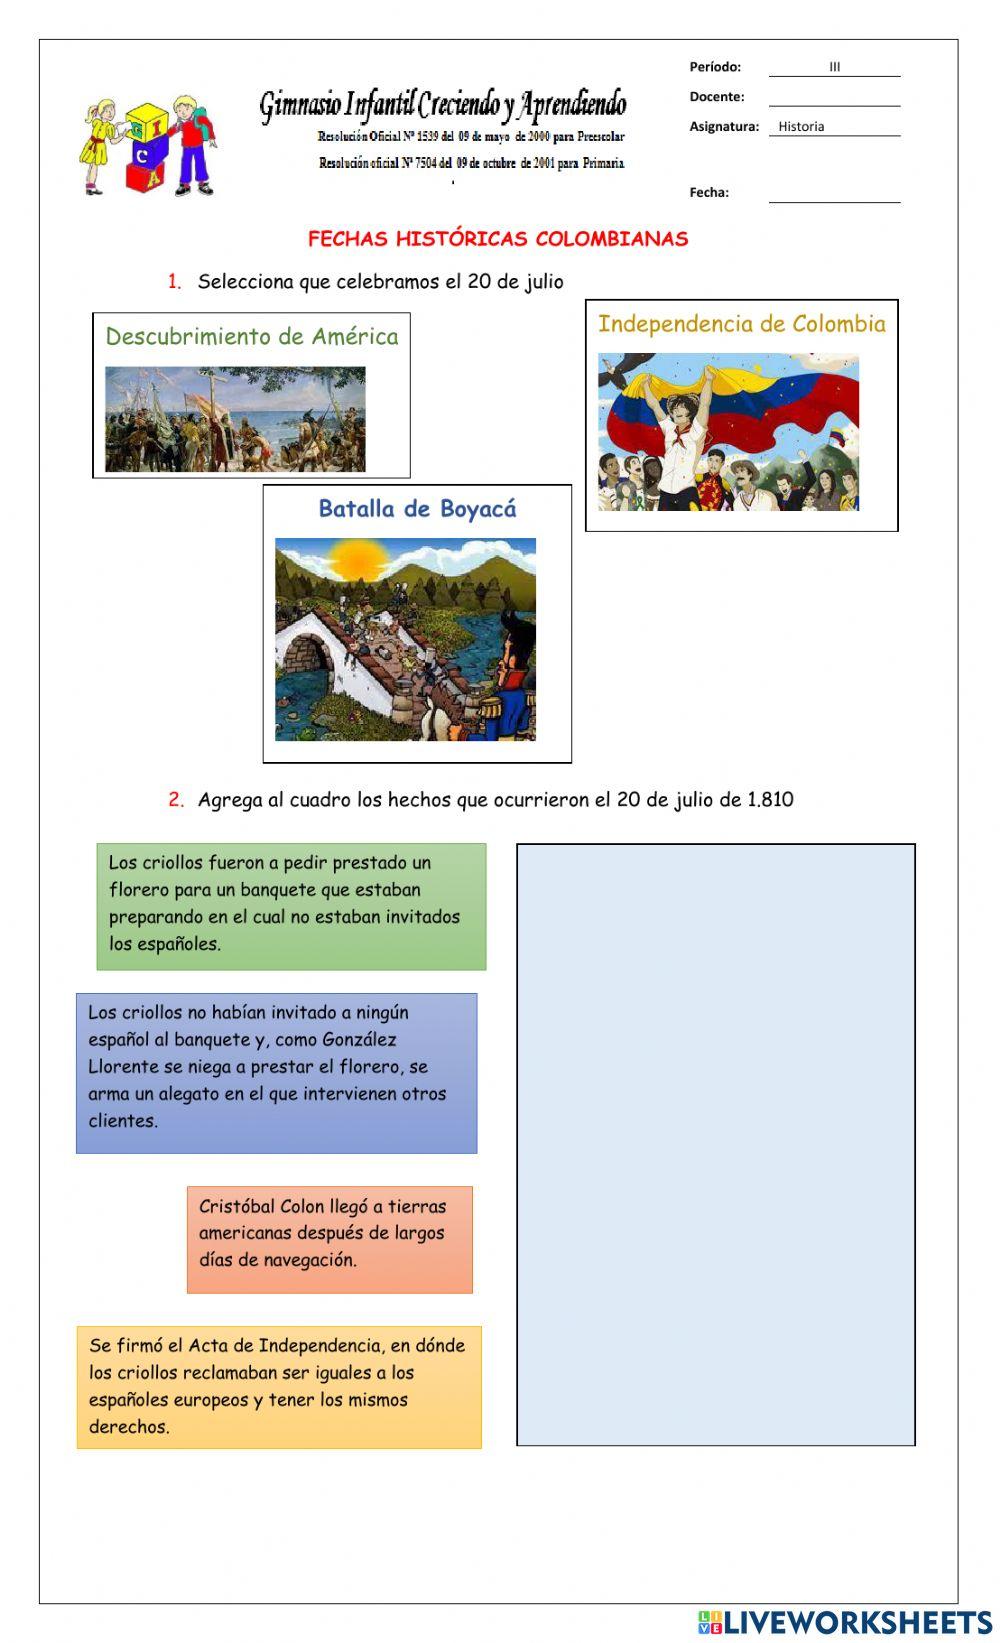 Fechas históricas colombianas